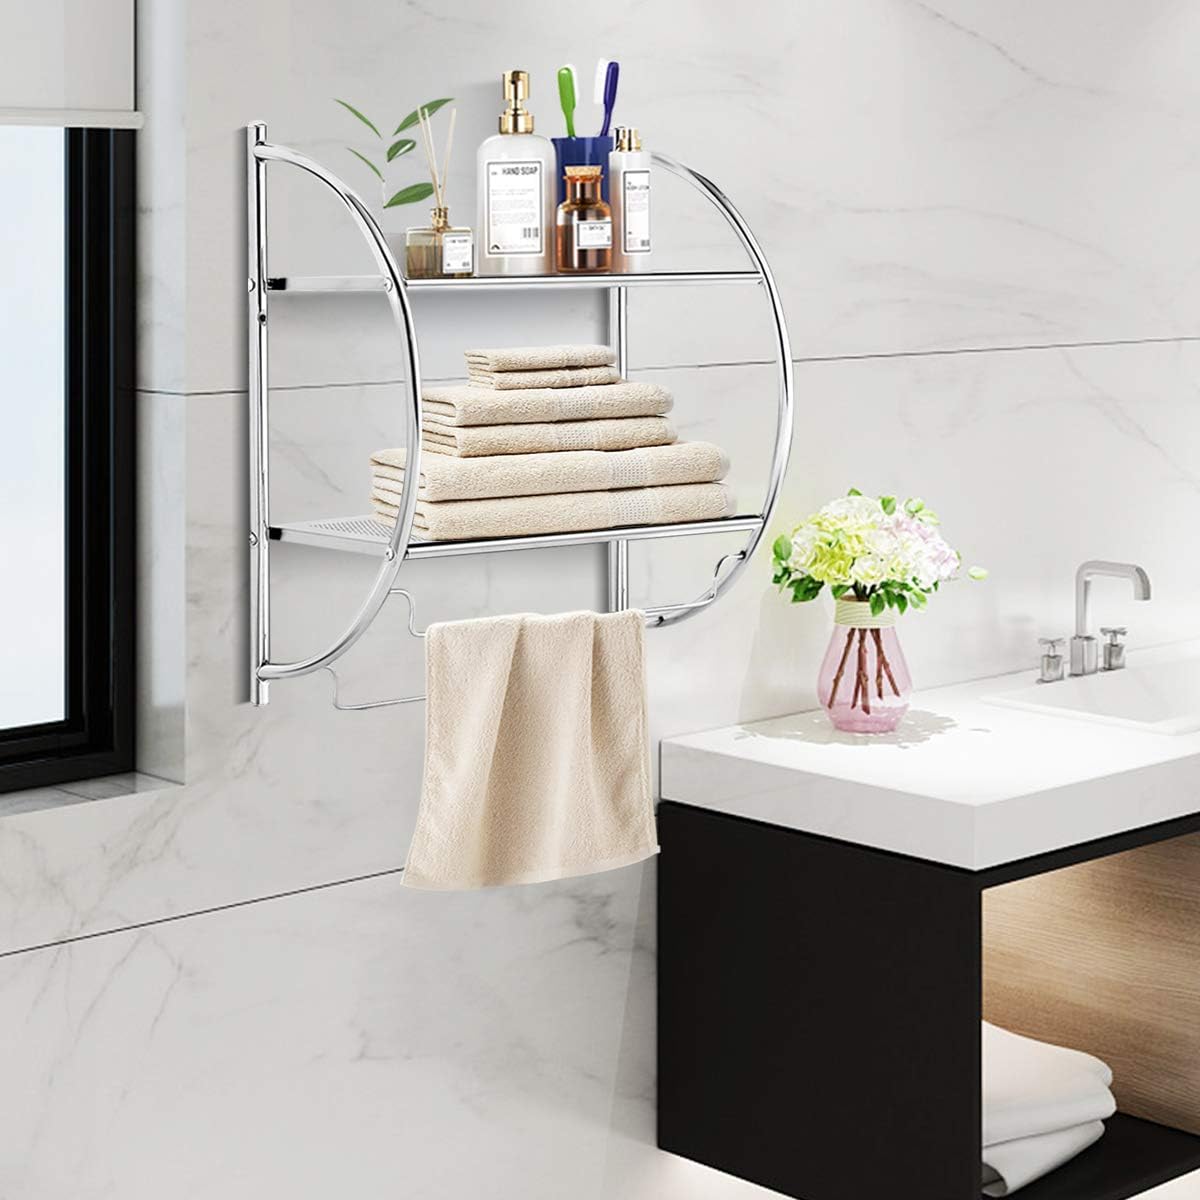 TANGKULA Wall Mount 2 Tier Bathroom Shelf with Towel Bars, 18"W X 10"D X 22"H, Chrome Bathroom Shelf, Home Toile